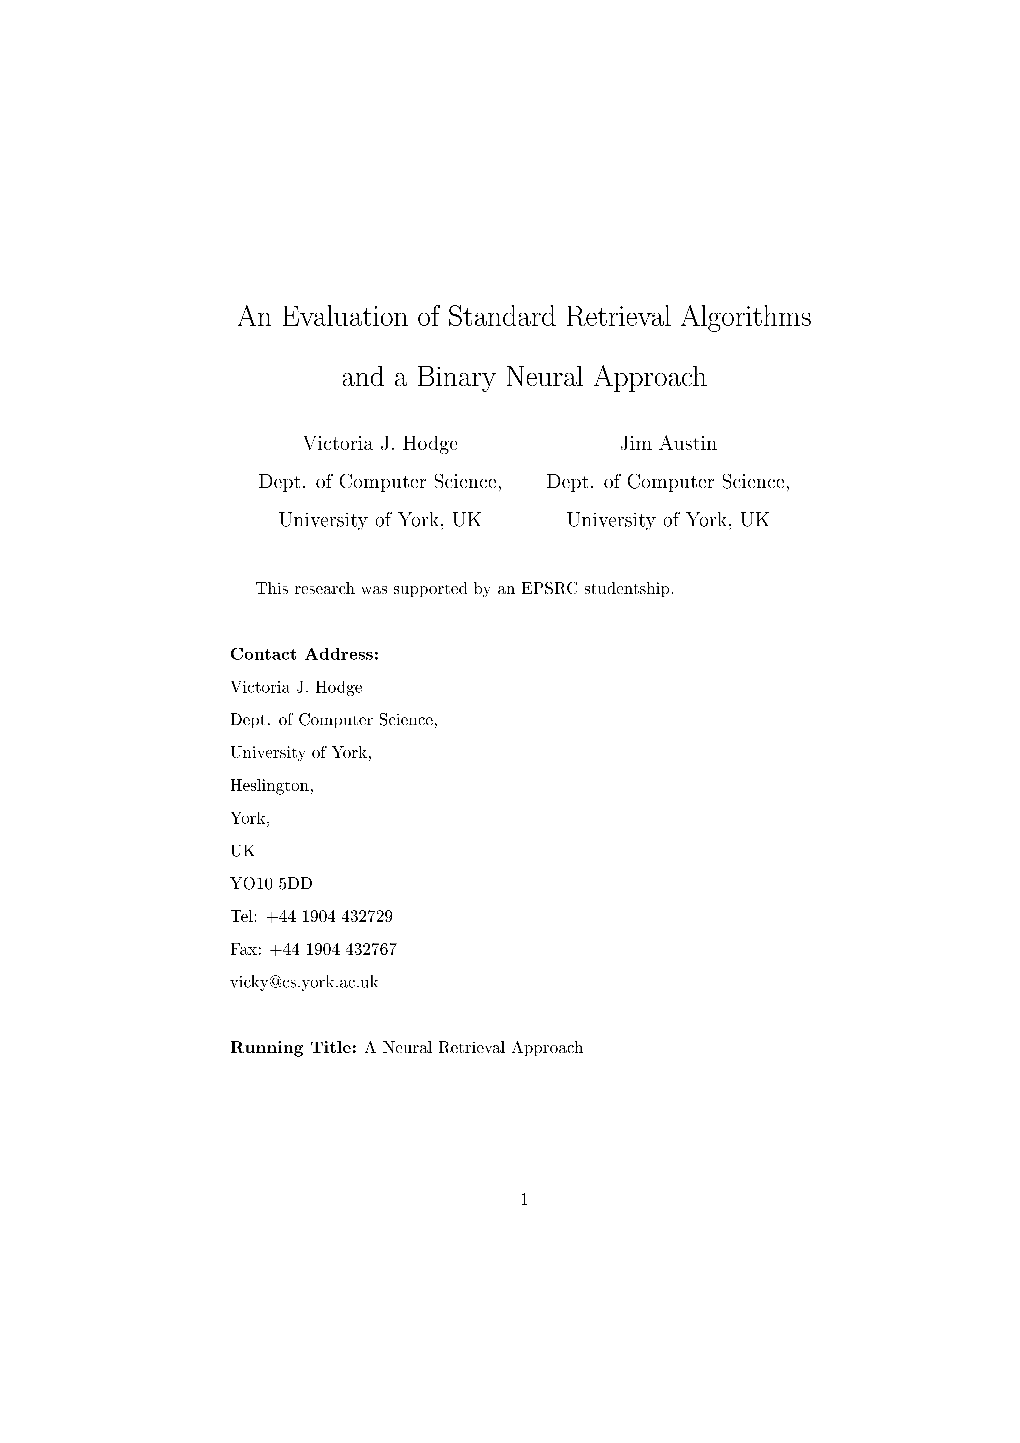 An Evaluation of Standard Retrieval Algorithms and a Binary Neural